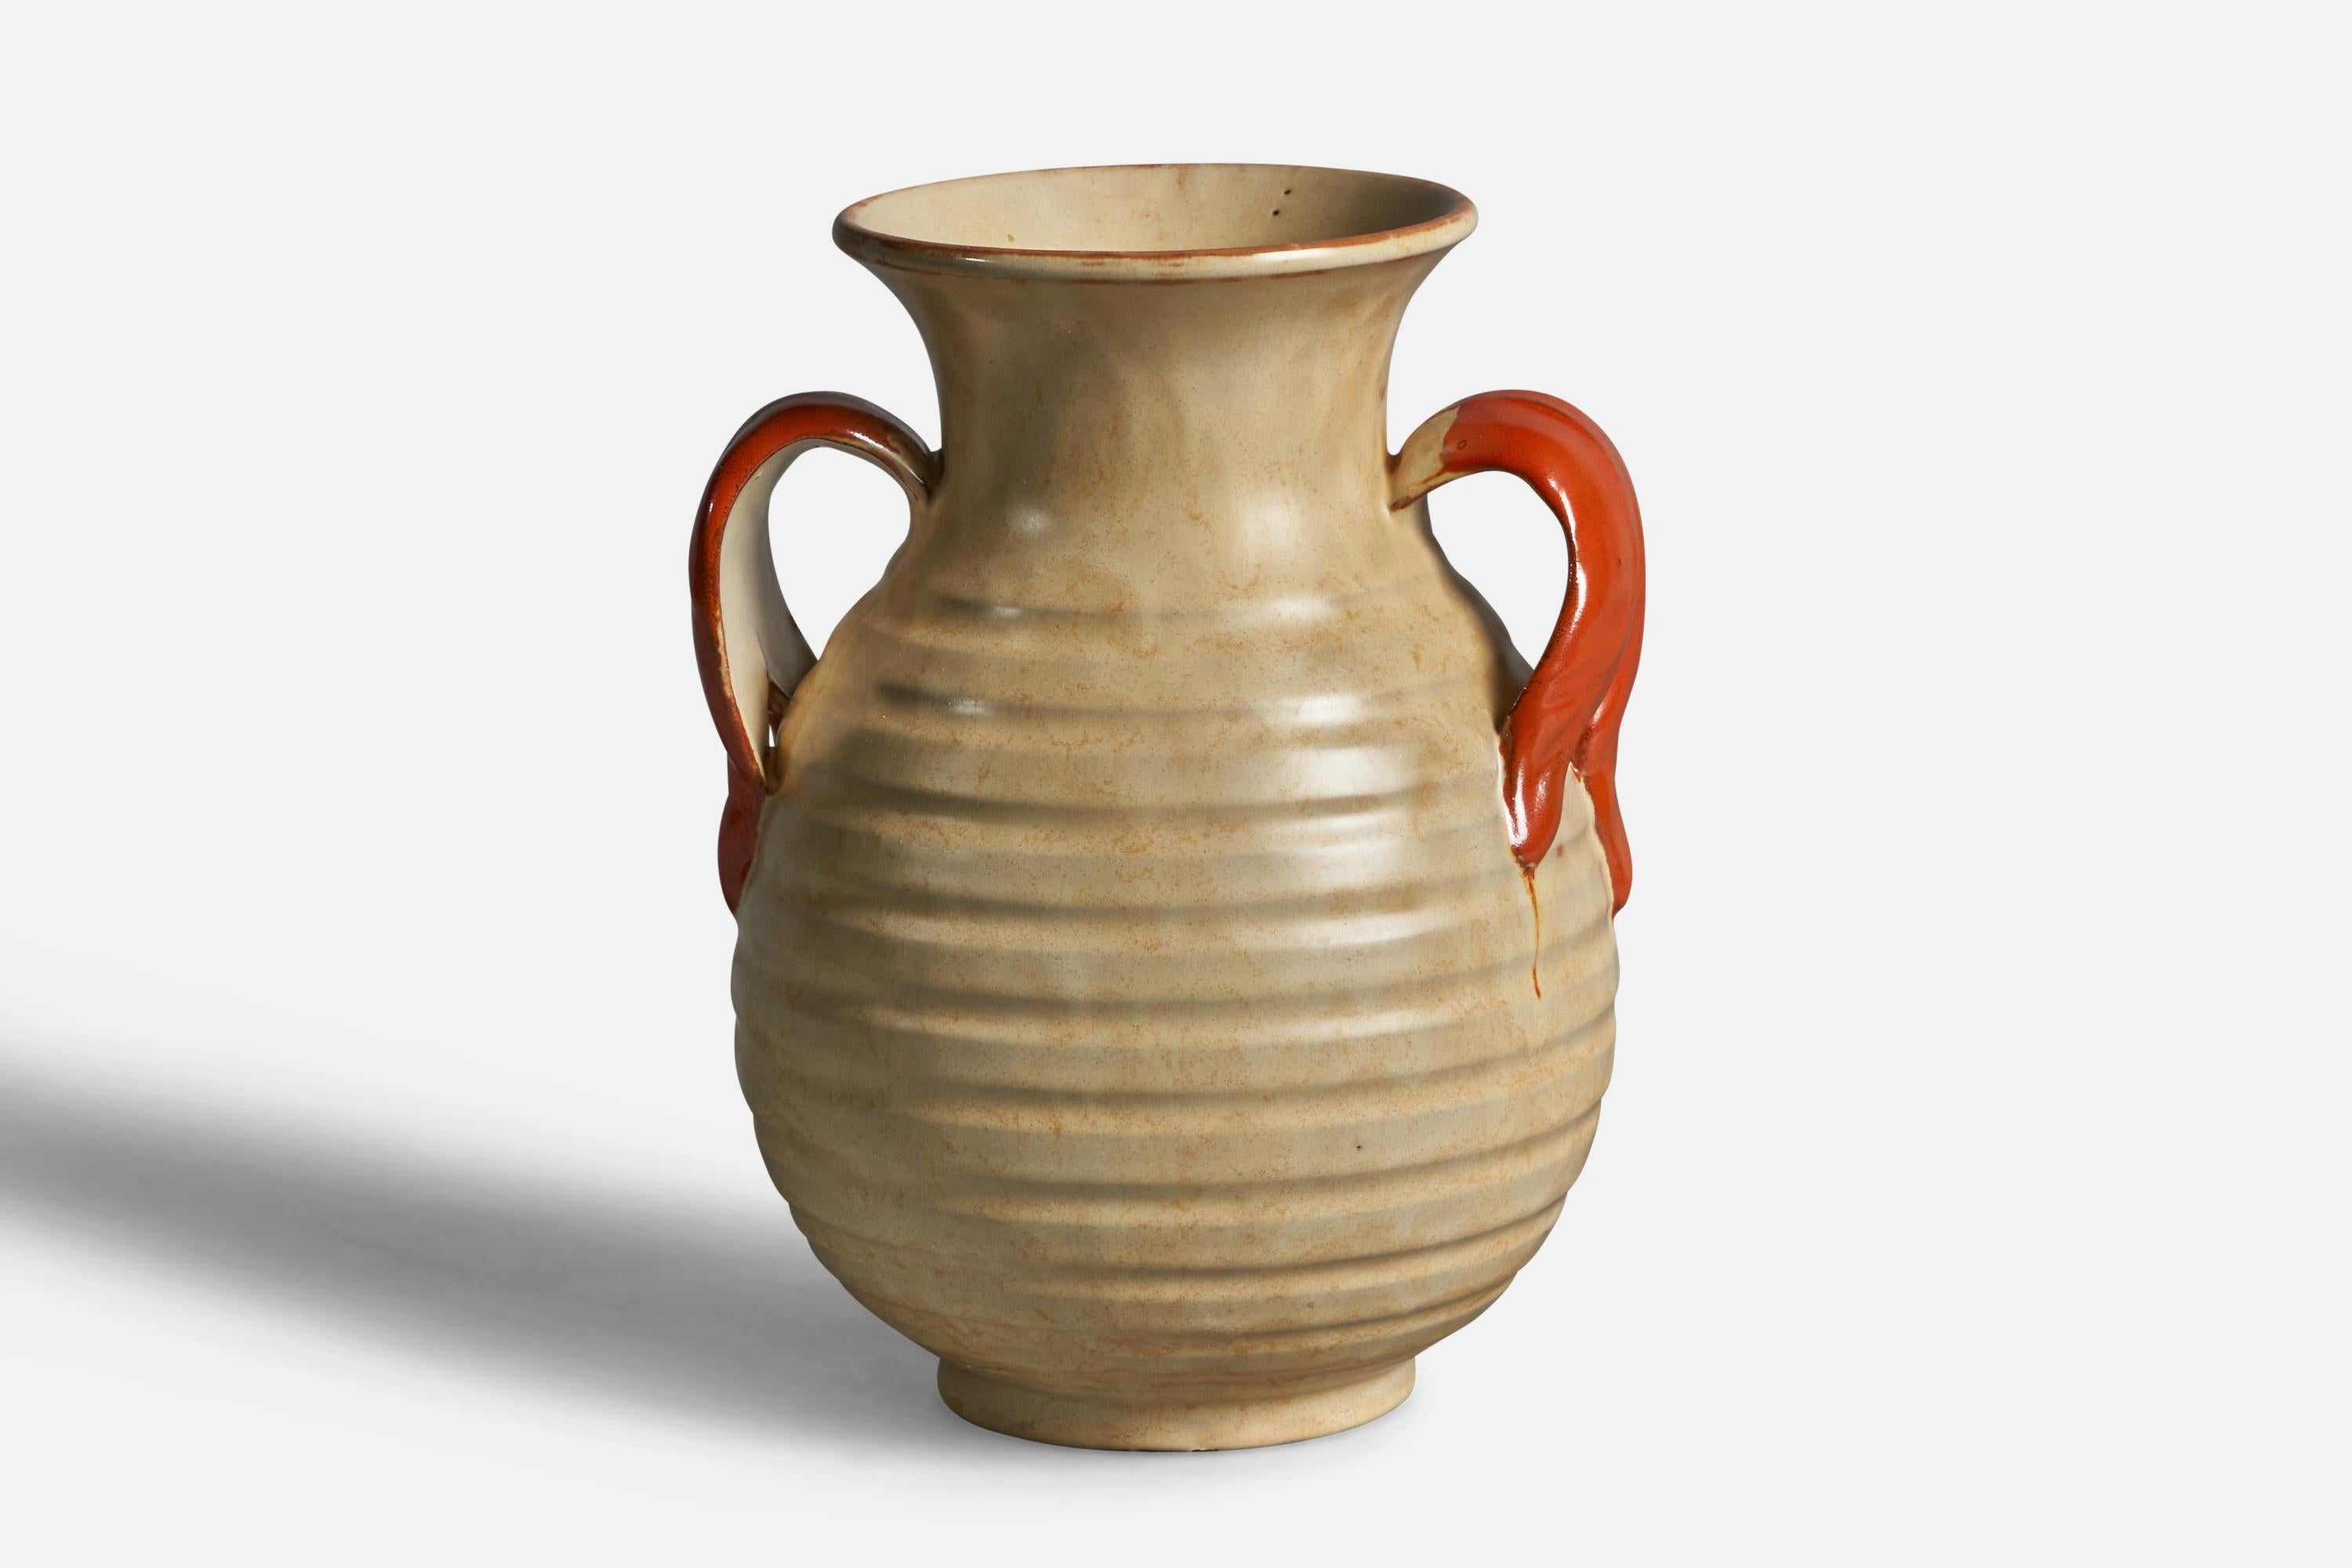 An incised beige and orange-glazed earthenware vase, designed and produced by Upsala Ekeby, Sweden, 1930s.